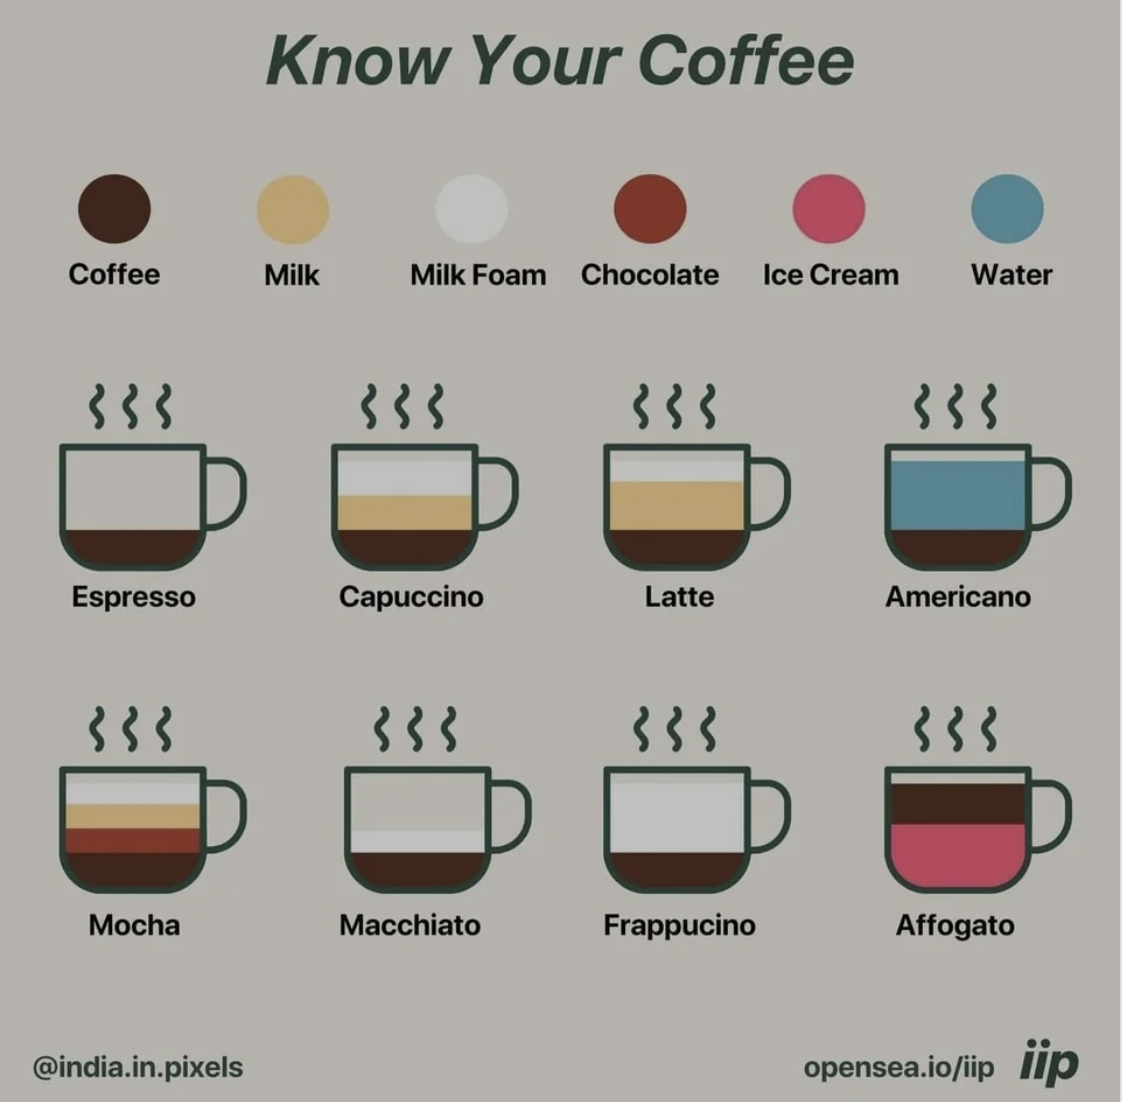 A coffee chart